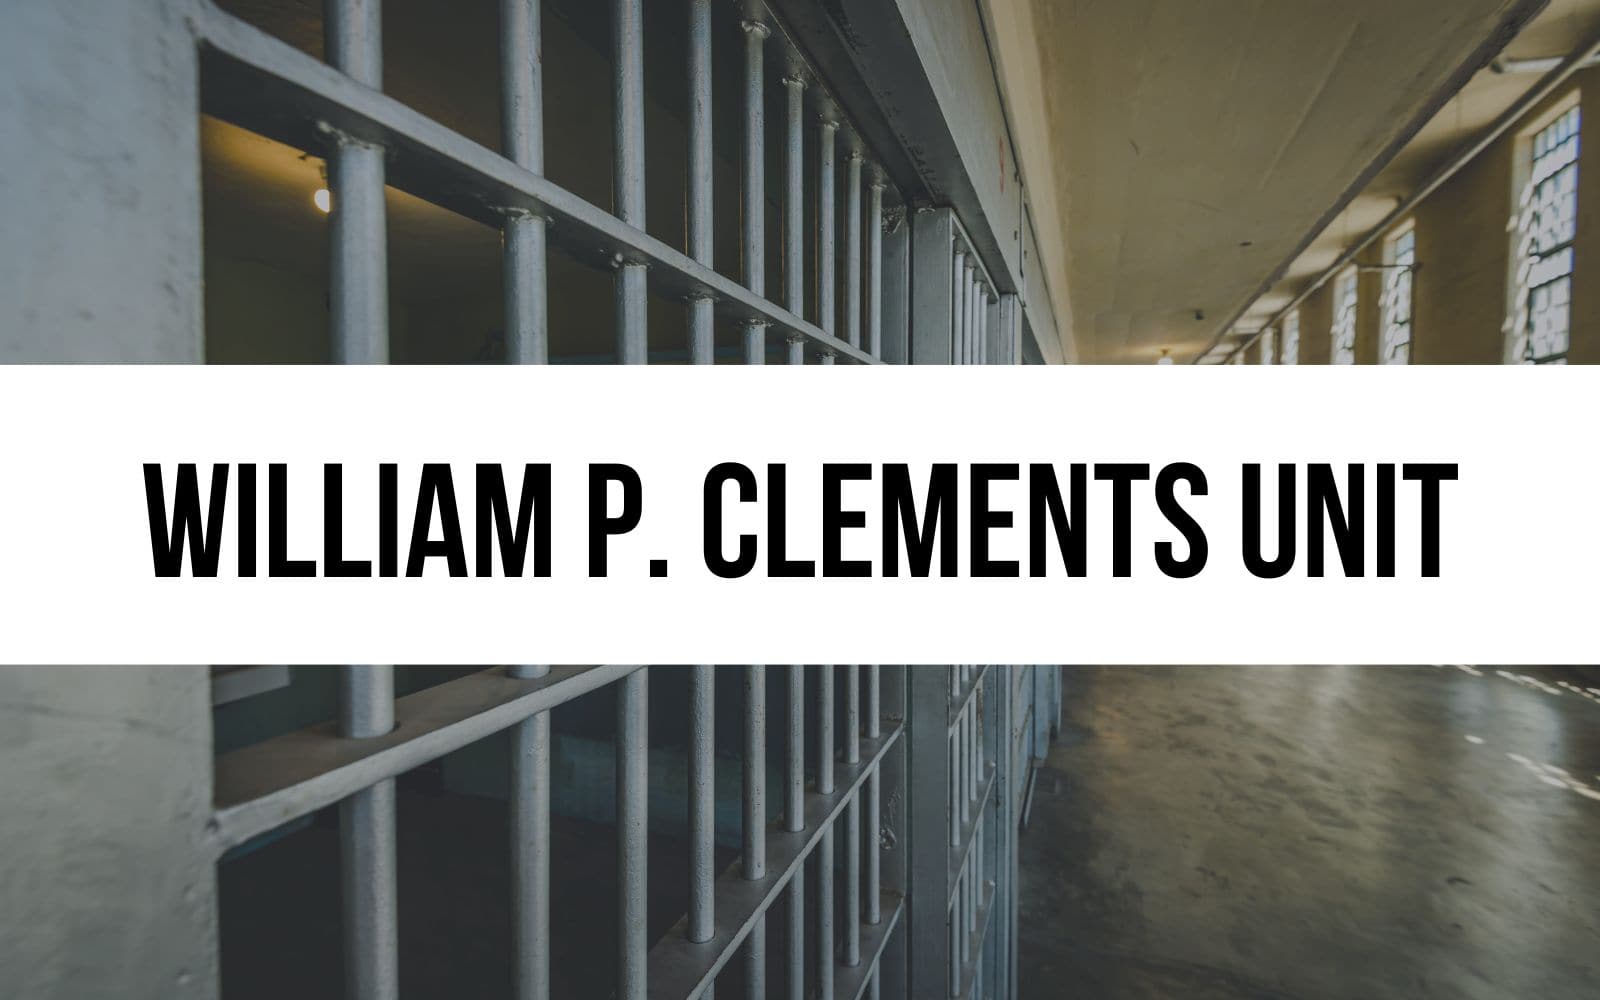 William P. Clements Unit